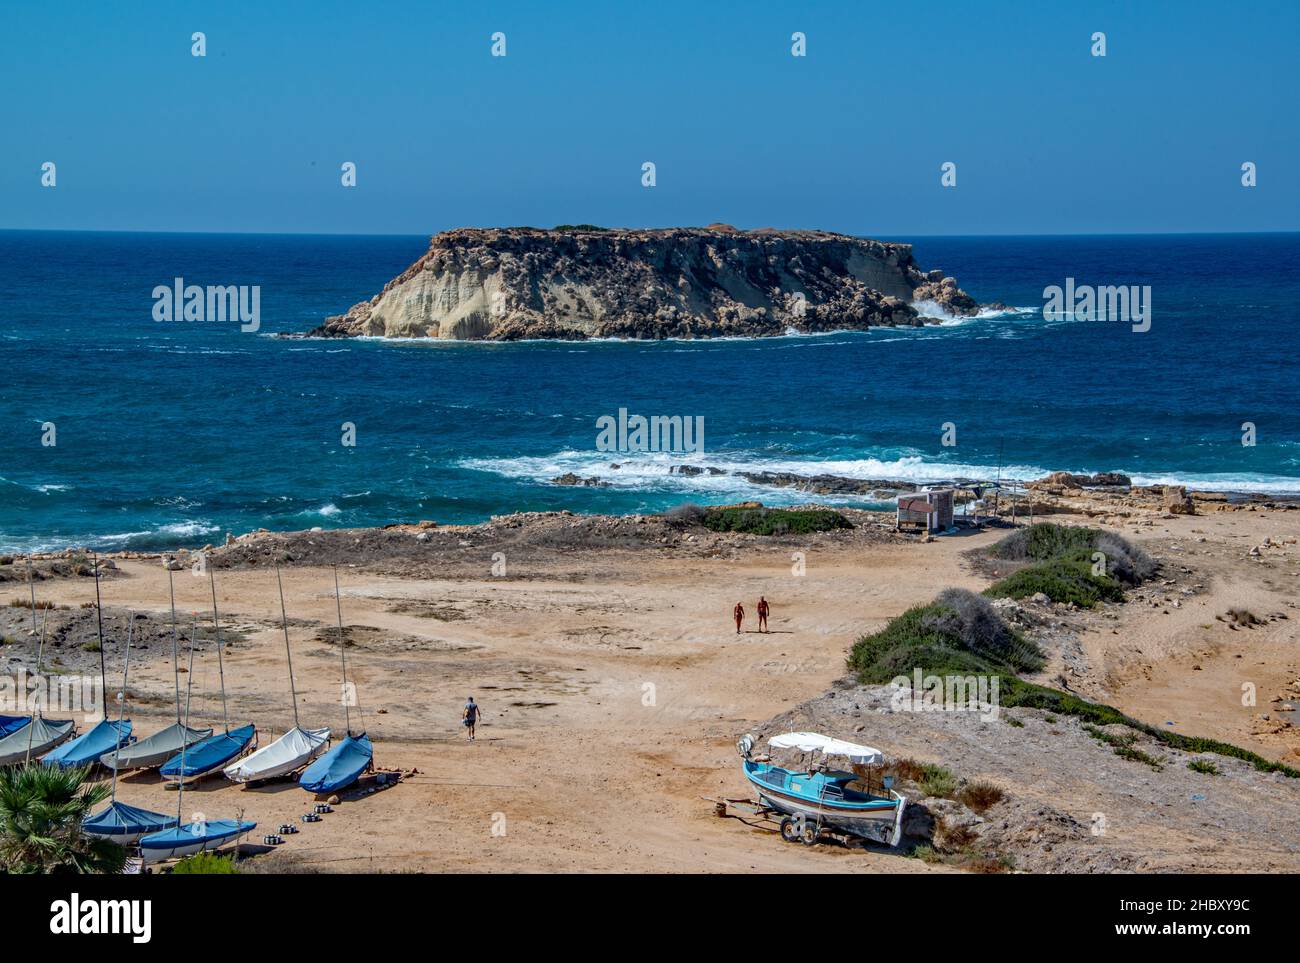 St Georges Island'Kakoskali', Akamas Peninsula, Cyprus. Stock Photo